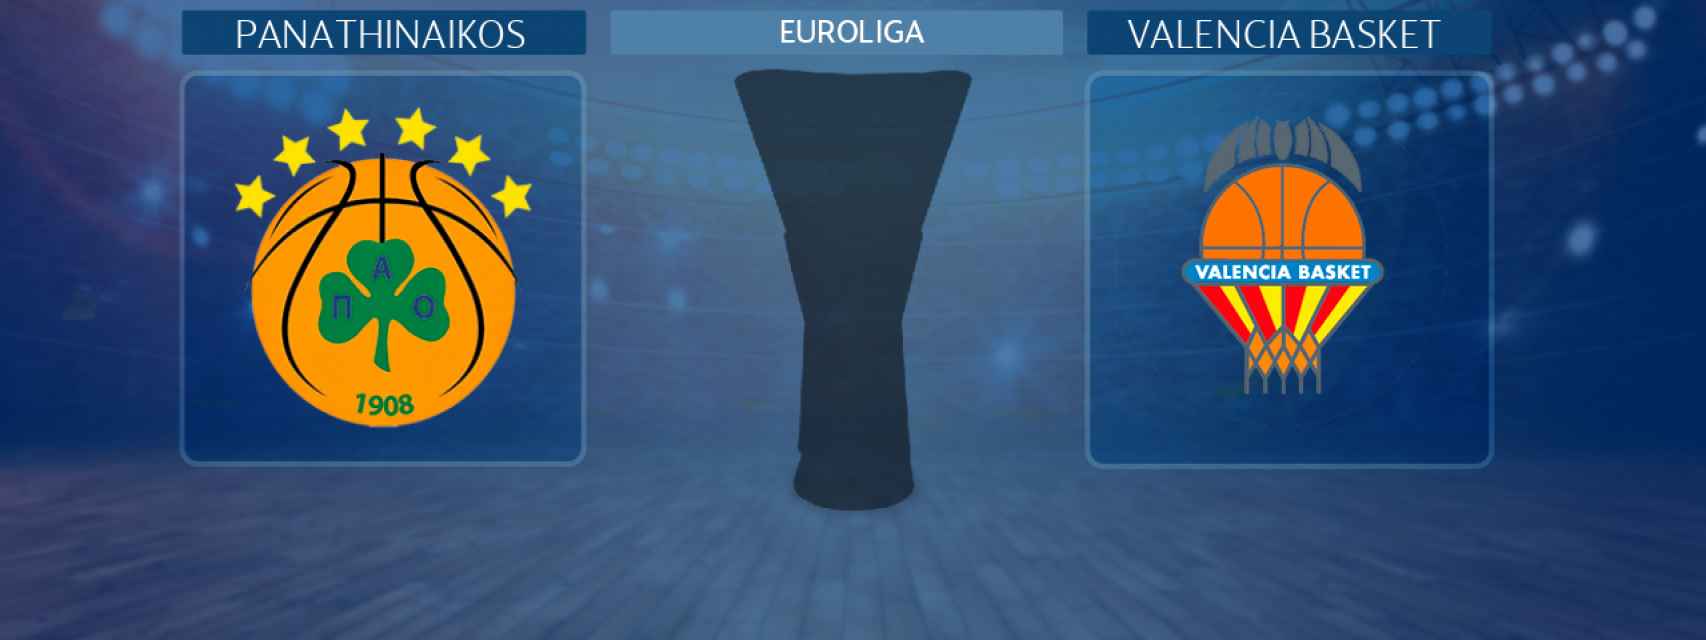 Panathinaikos - Valencia Basket, partido de la Euroliga